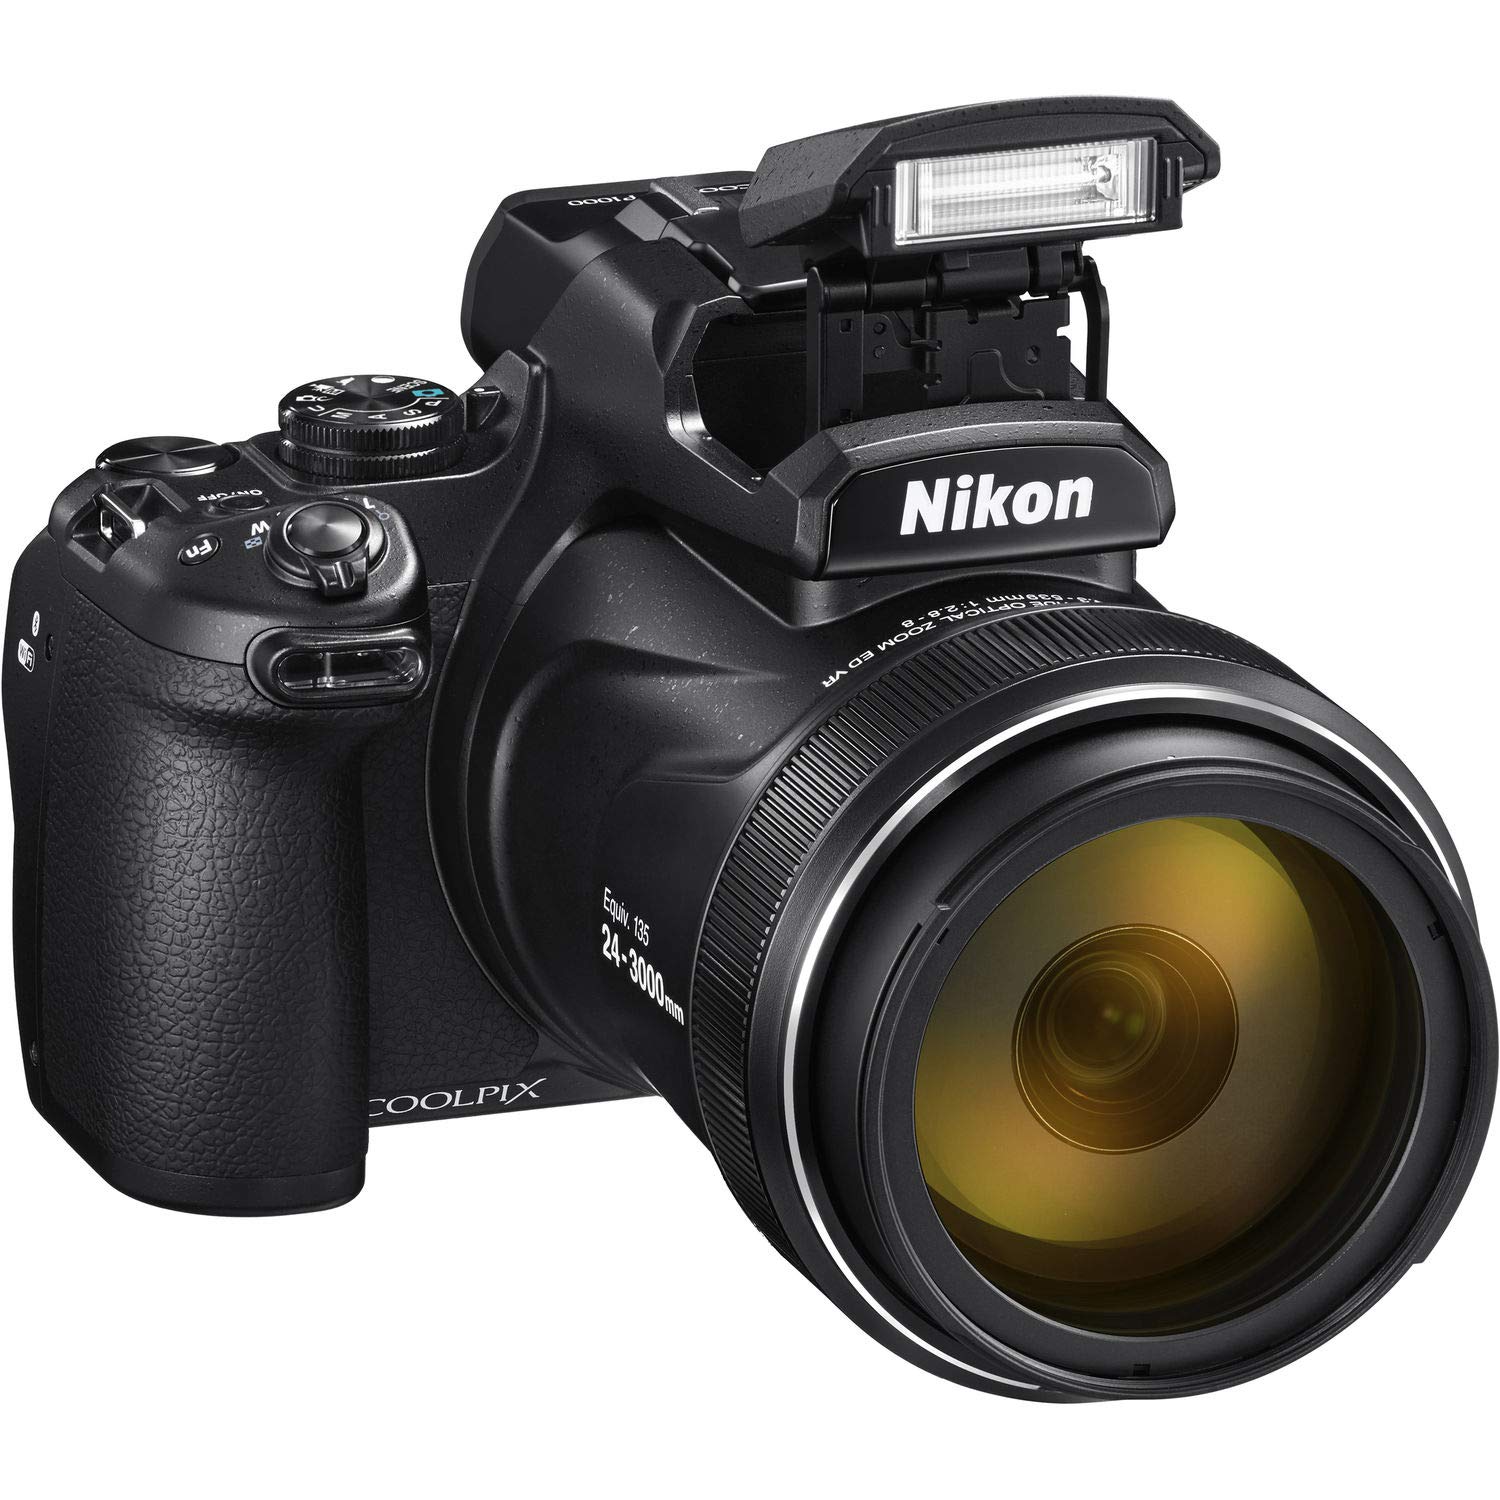 Nikon COOLPIX P1000 Digital Camera + 256GB Memory Card Extreme Bundle International Model